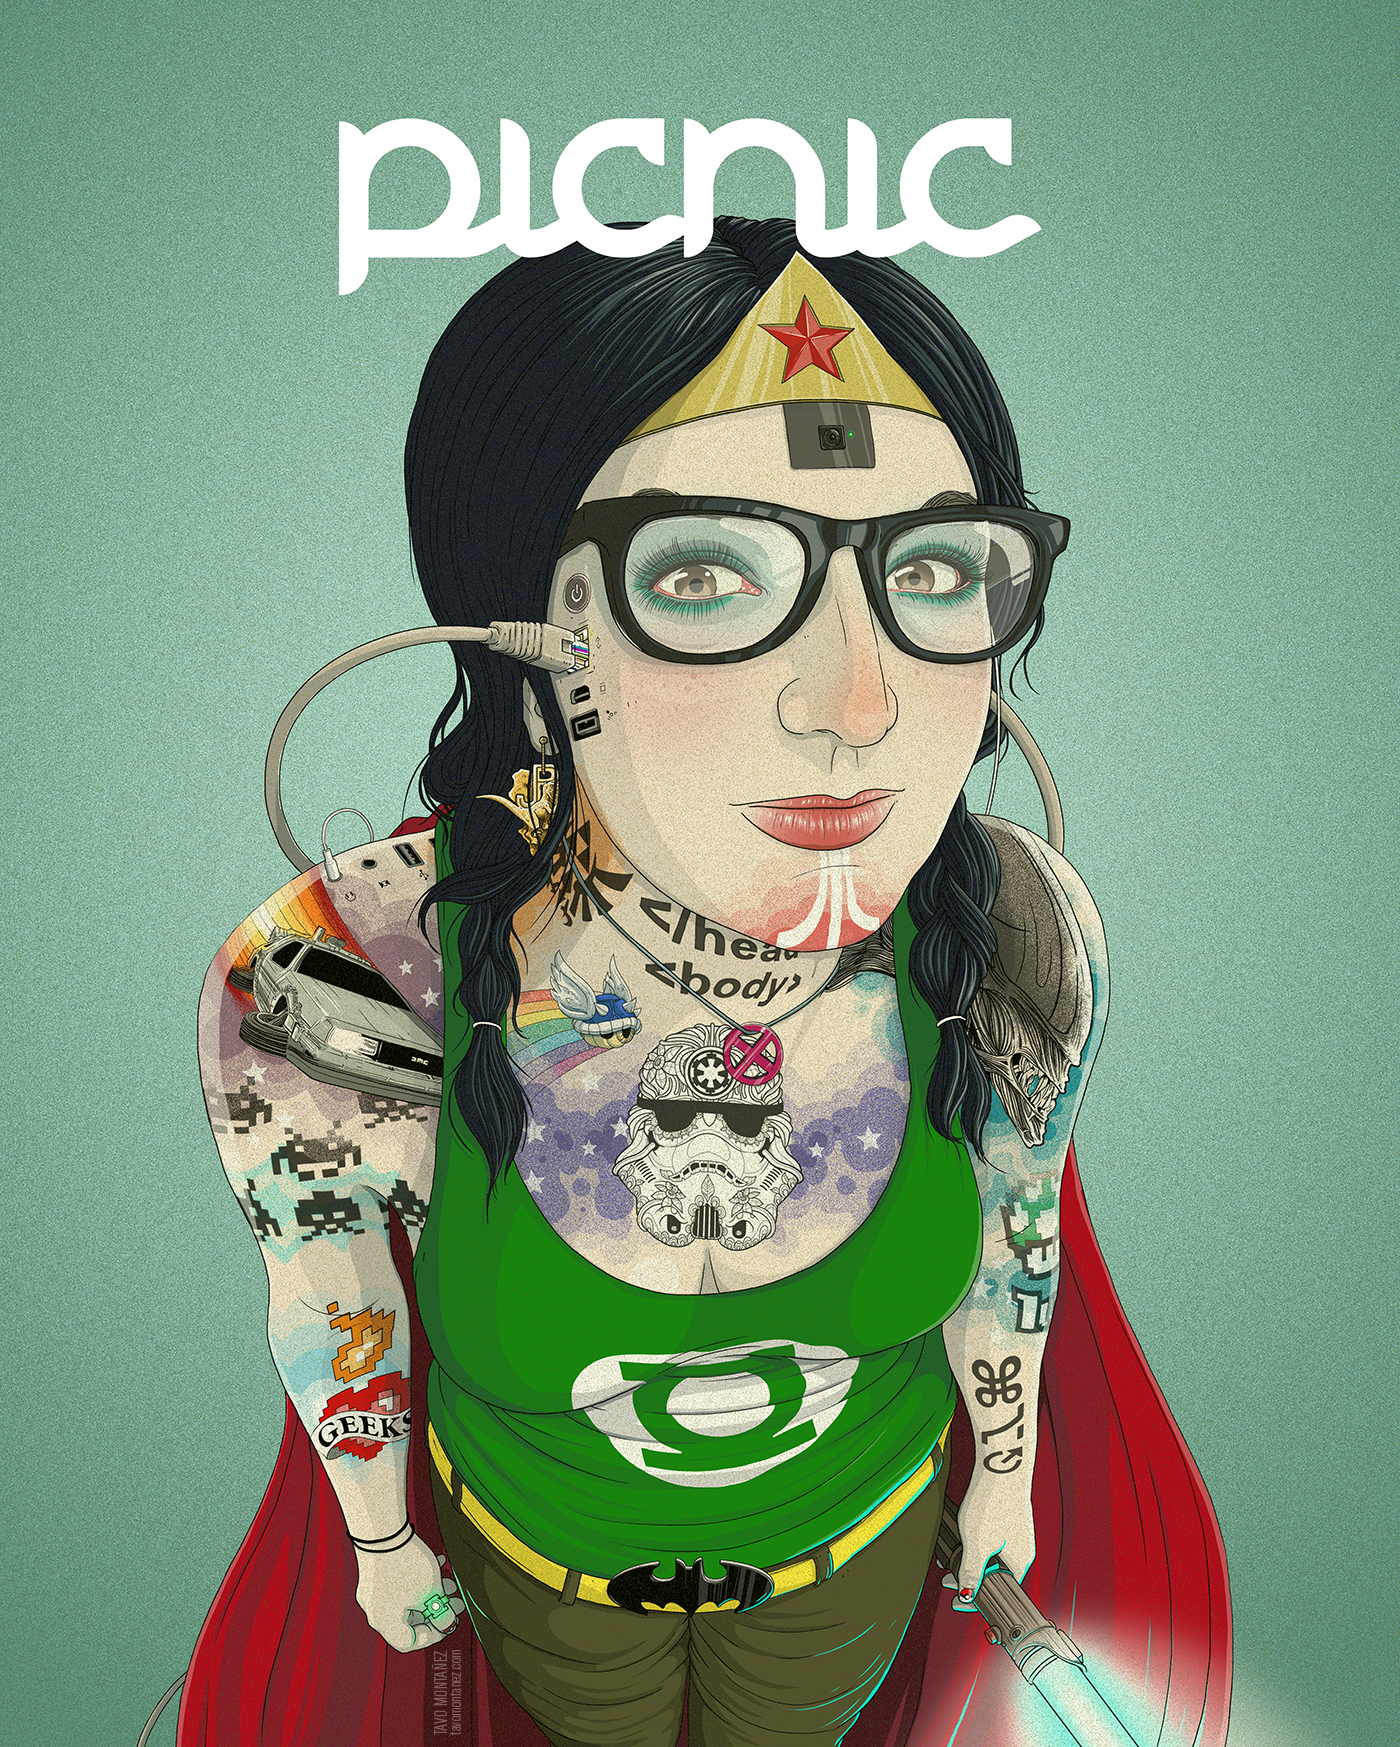 picnic magazine ilustracional geek digital illustration cover magazine Digital Art  Wacom Intuos wacom